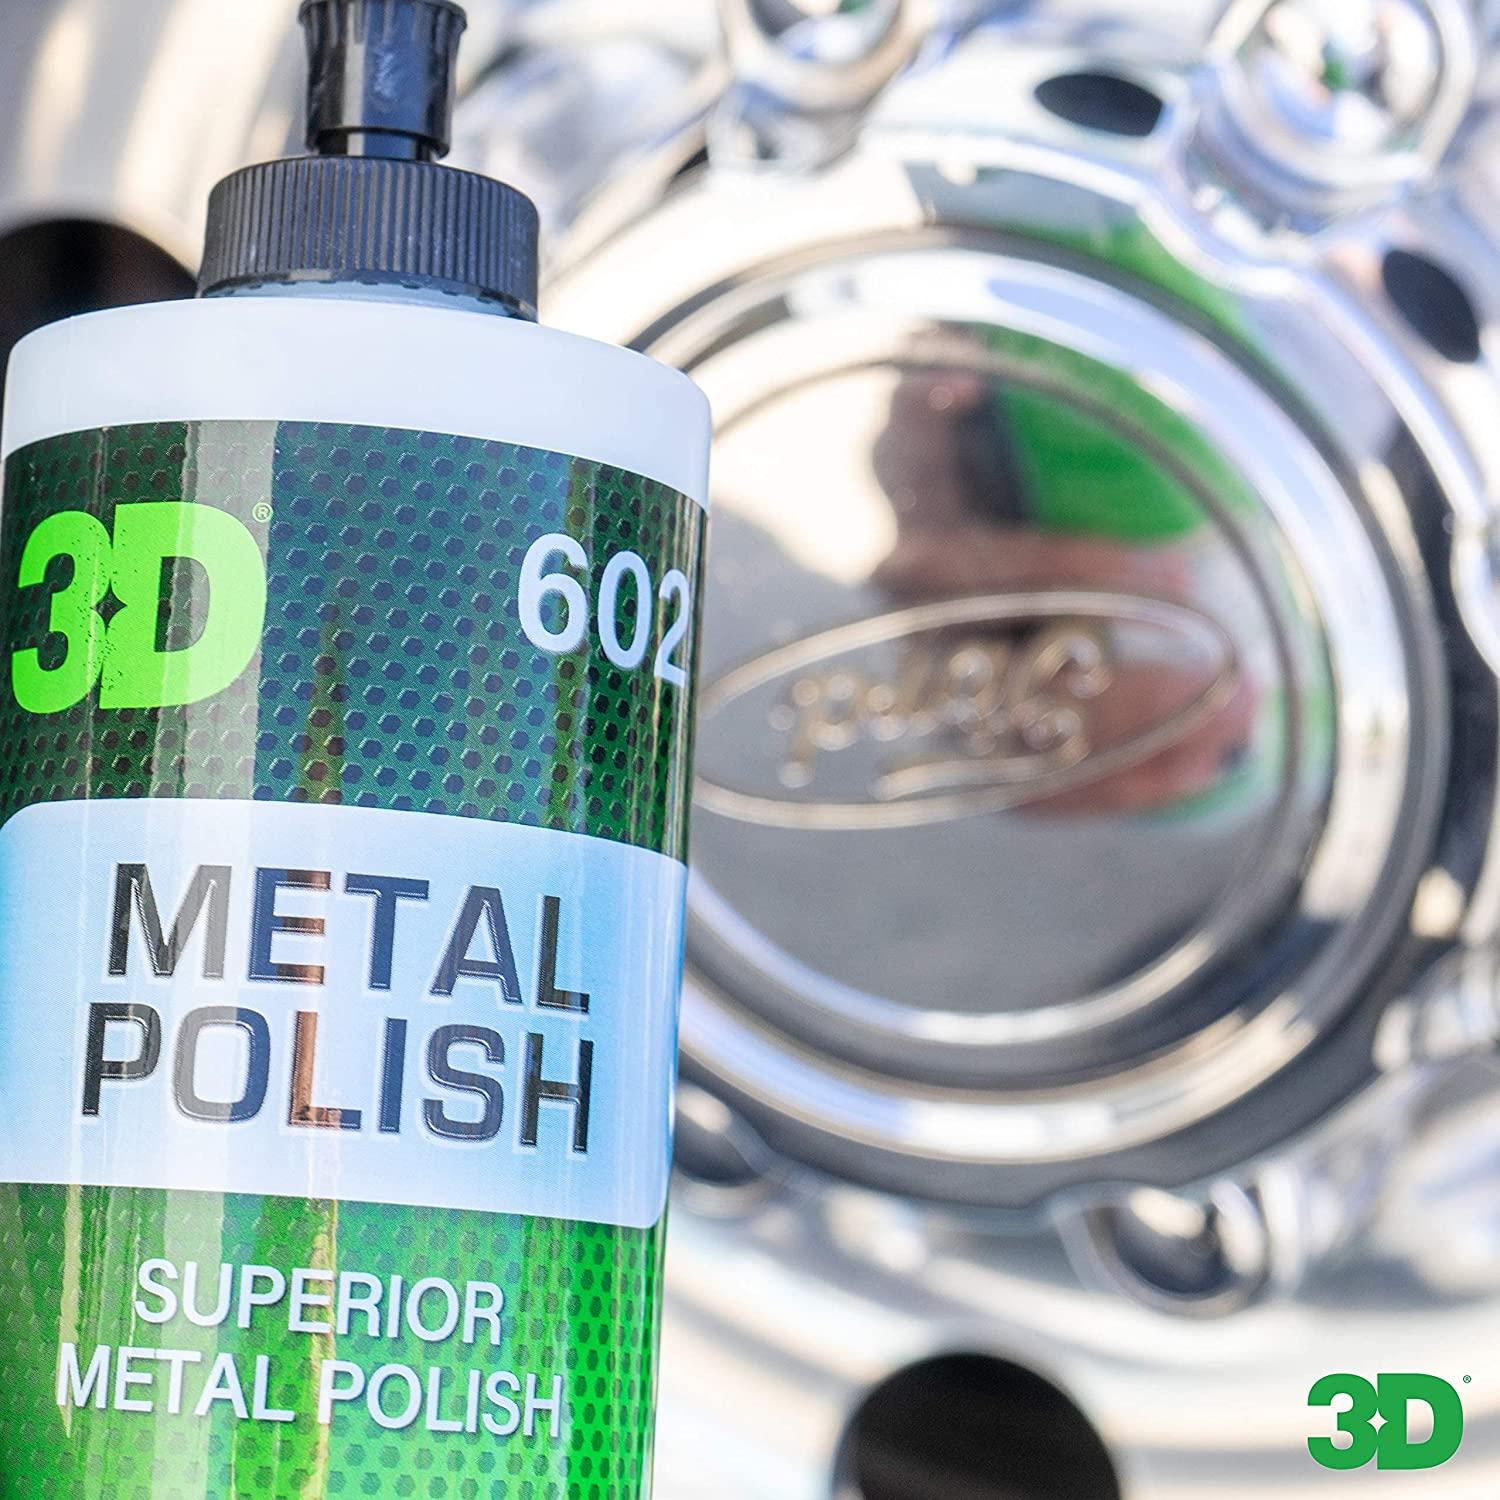 3D Metal Polish - Heavy Duty Multi Purpose Polish, Cleaner